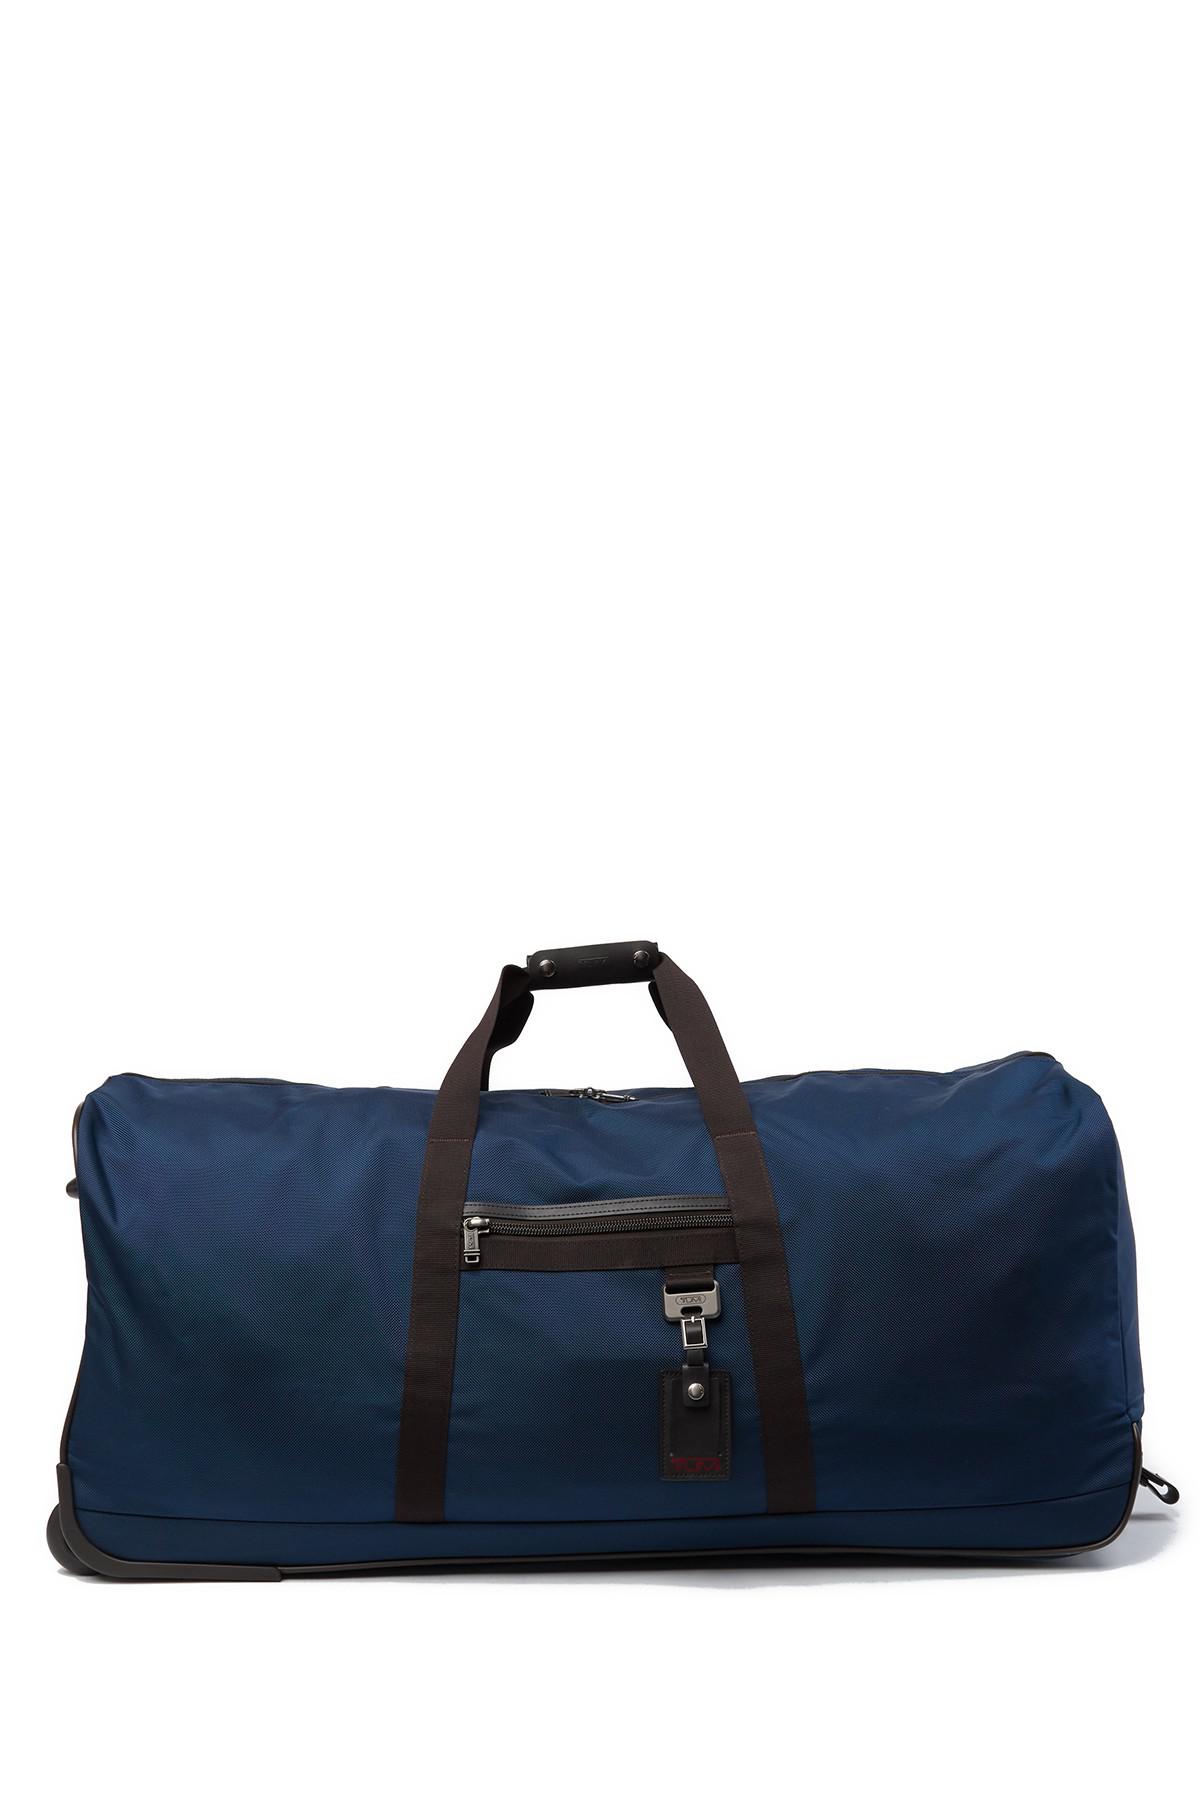 Tumi Bridgeway Collapsible Wheeled Duffel Bag in Blue | Lyst